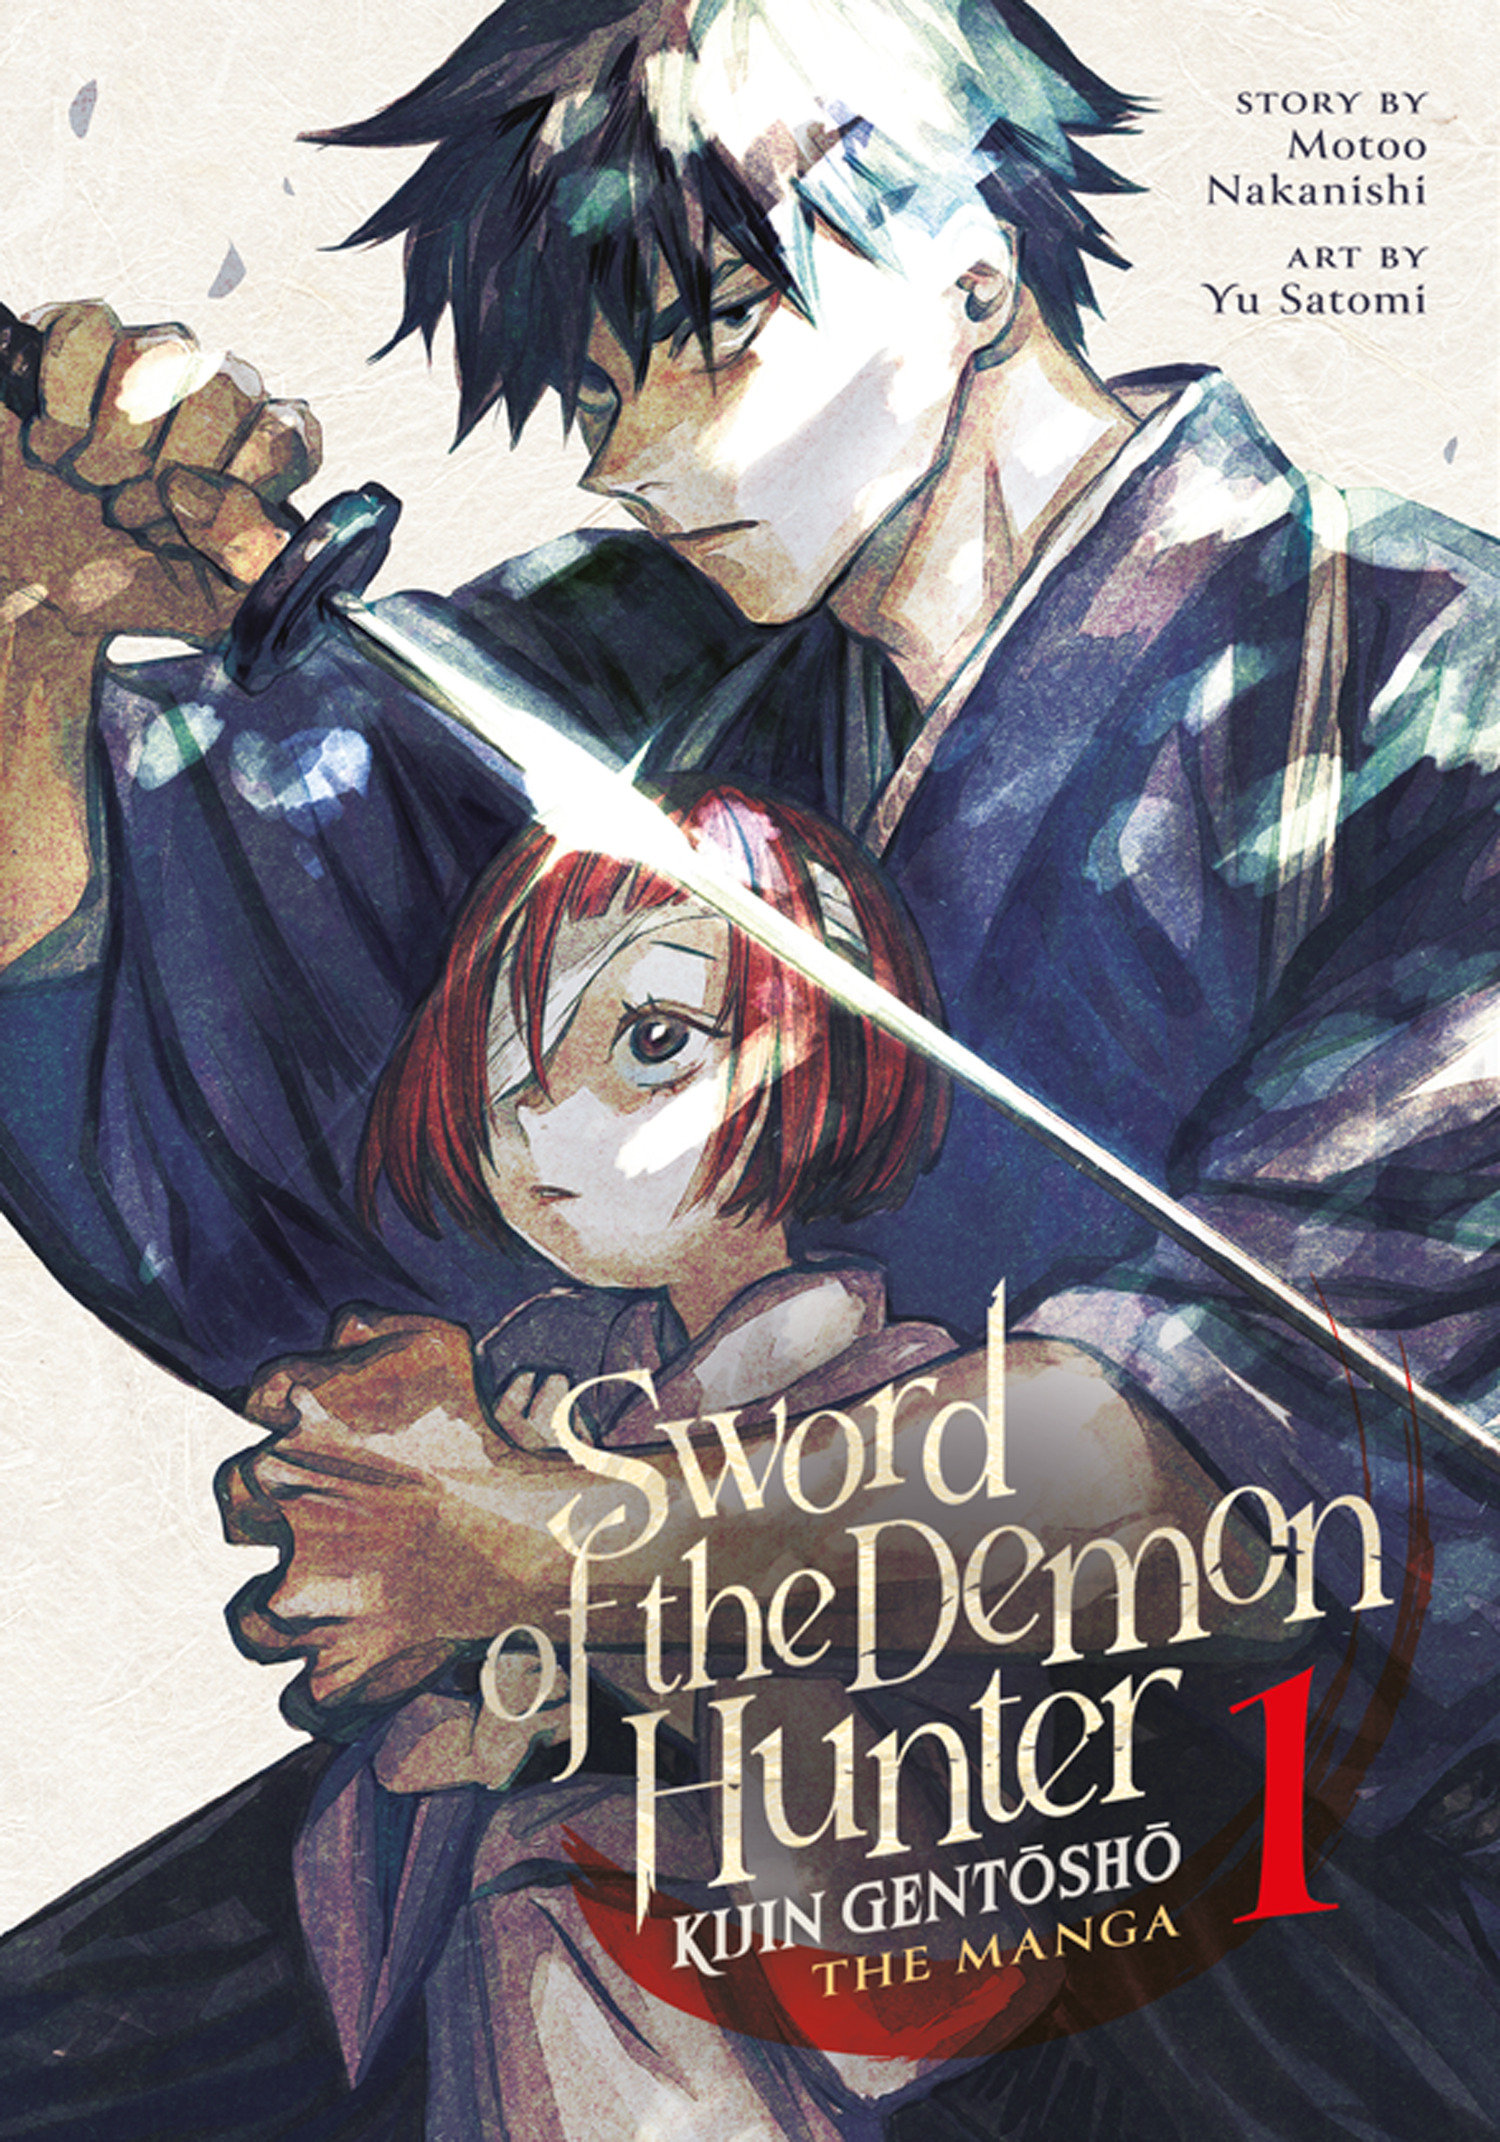 Sword of the Demon Hunter Kijin Gentosho Manga Volume 1 (Mature)